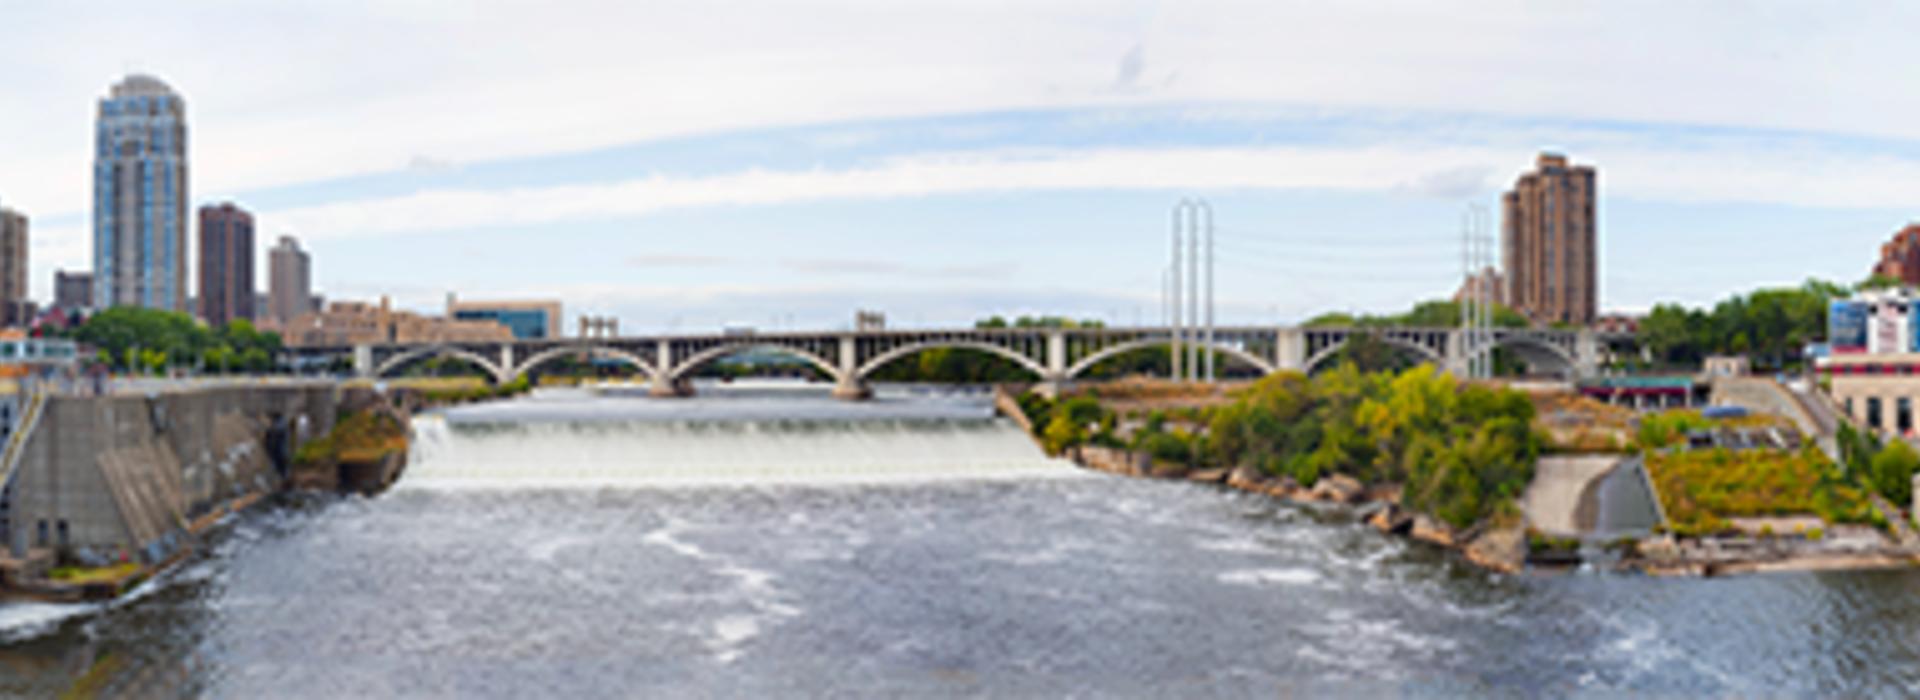 Minneapolis panorama - Saint Anthony Falls